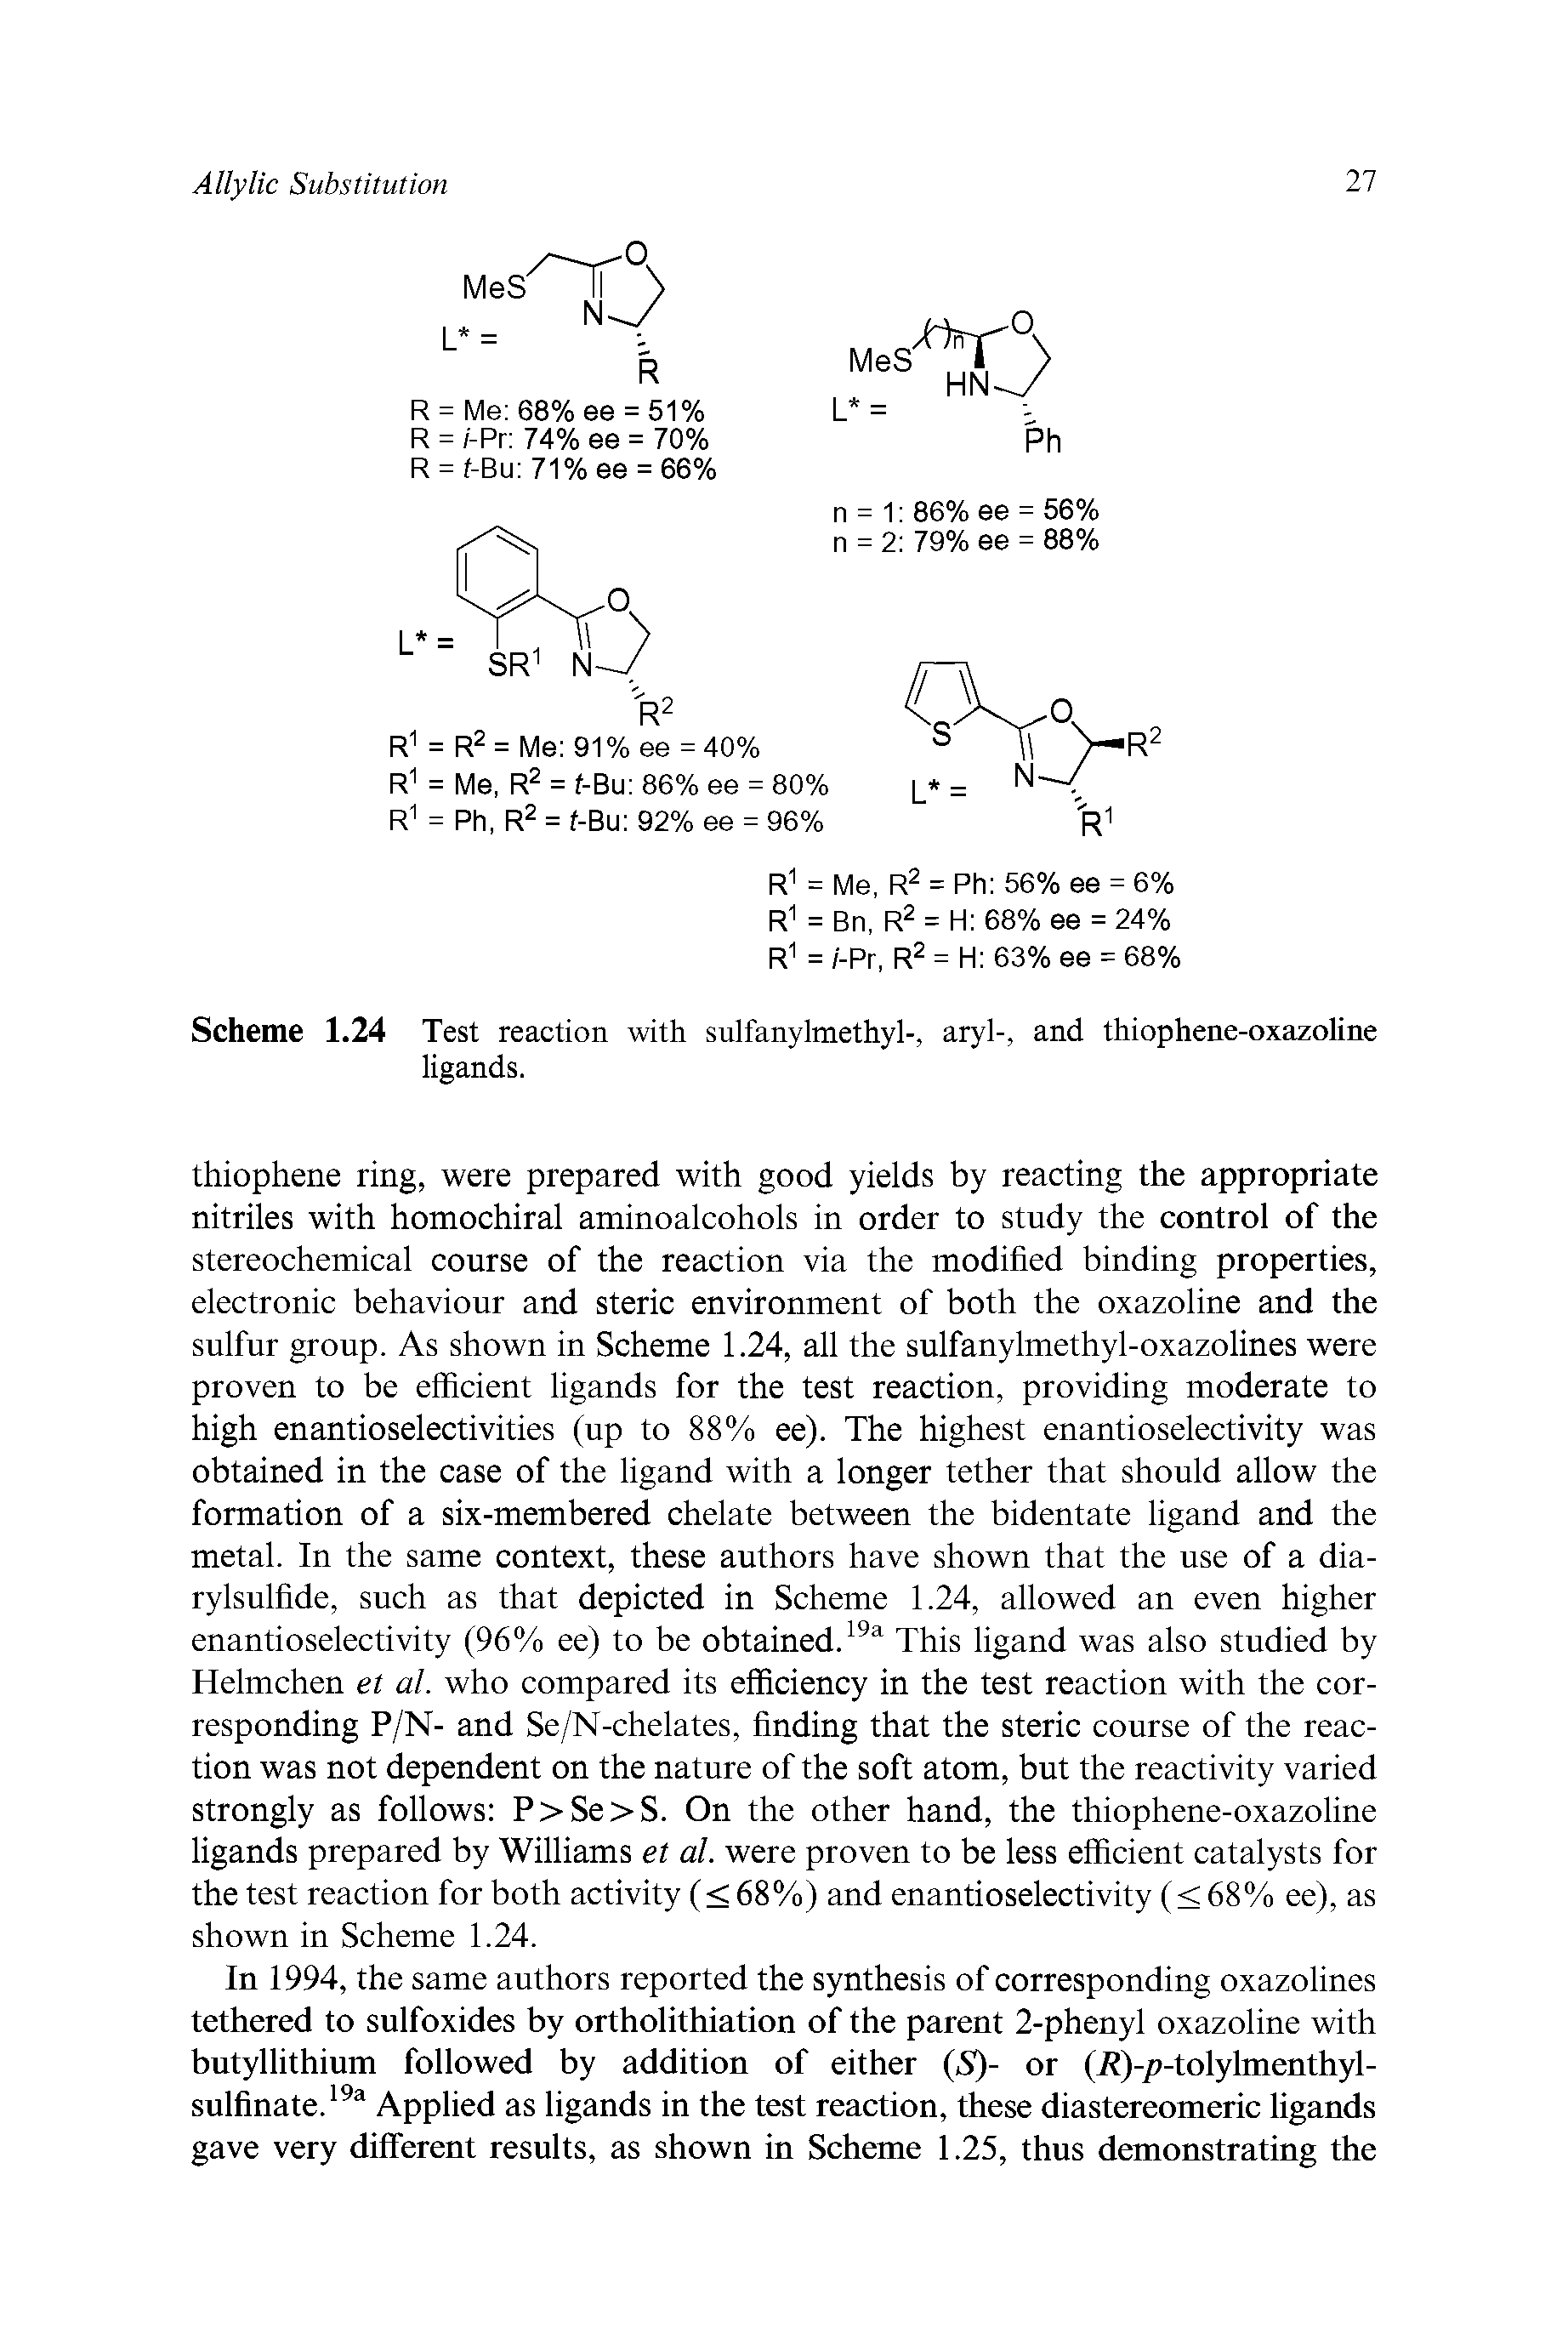 Scheme 1.24 Test reaction with sulfanylmethyl-, aryl-, and thiophene-oxazoline ligands.